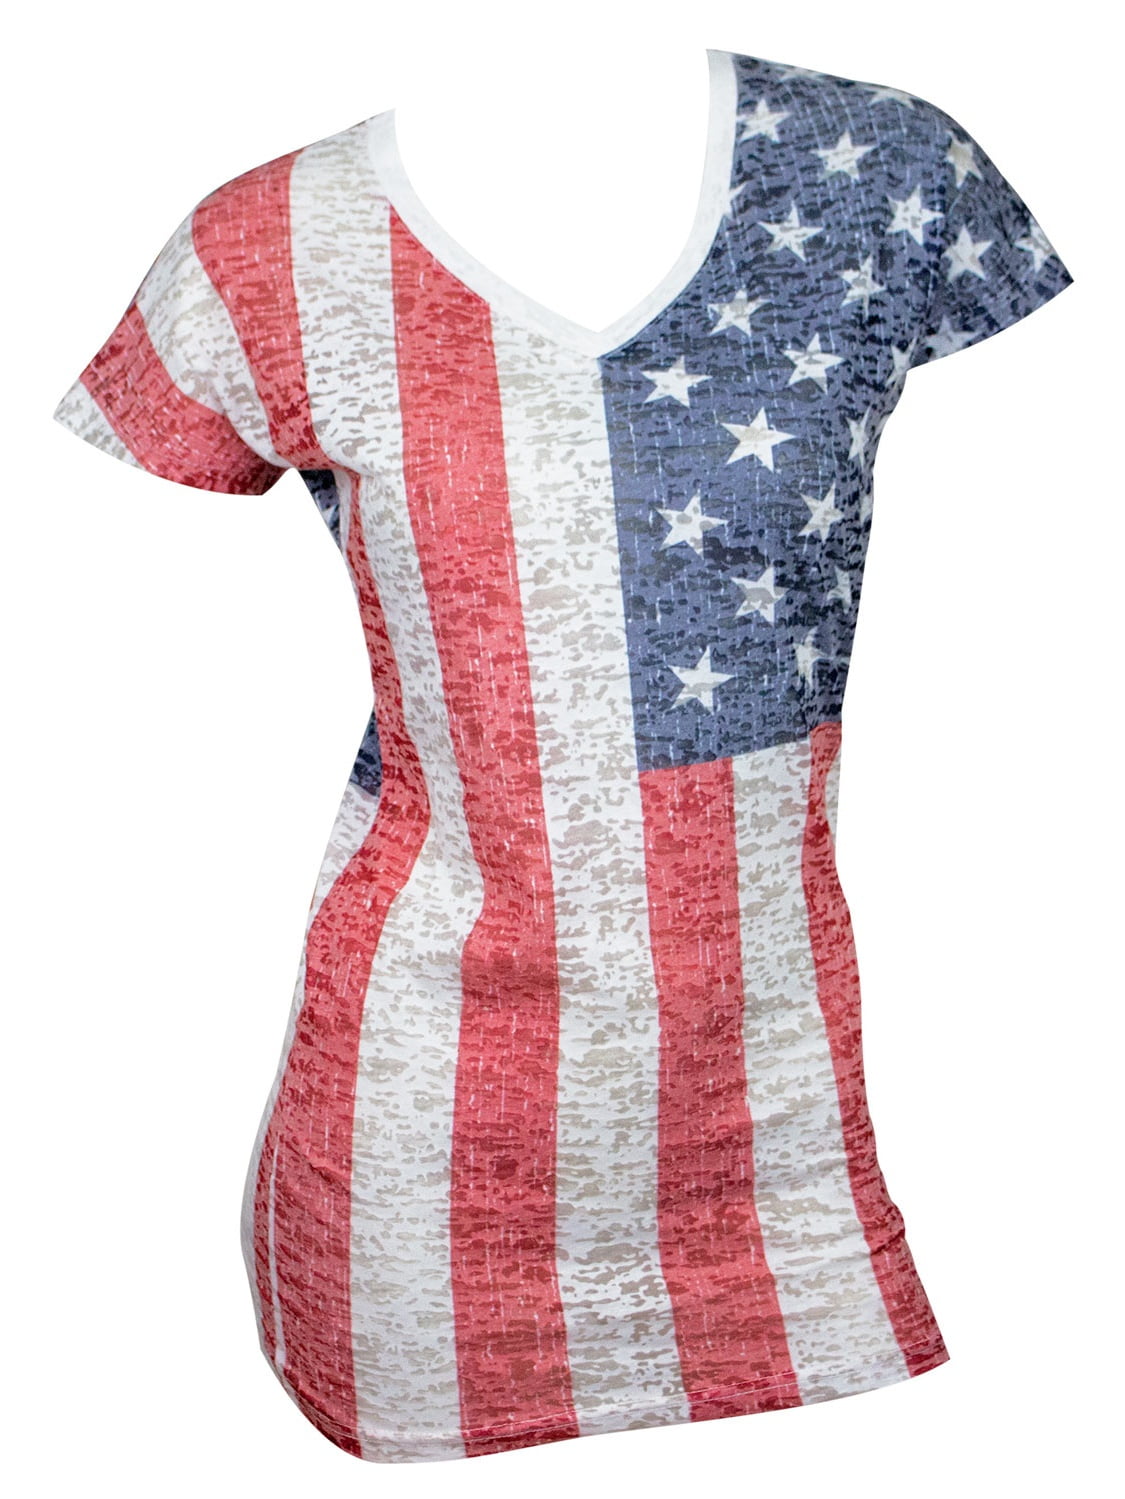 american flag shirt women's